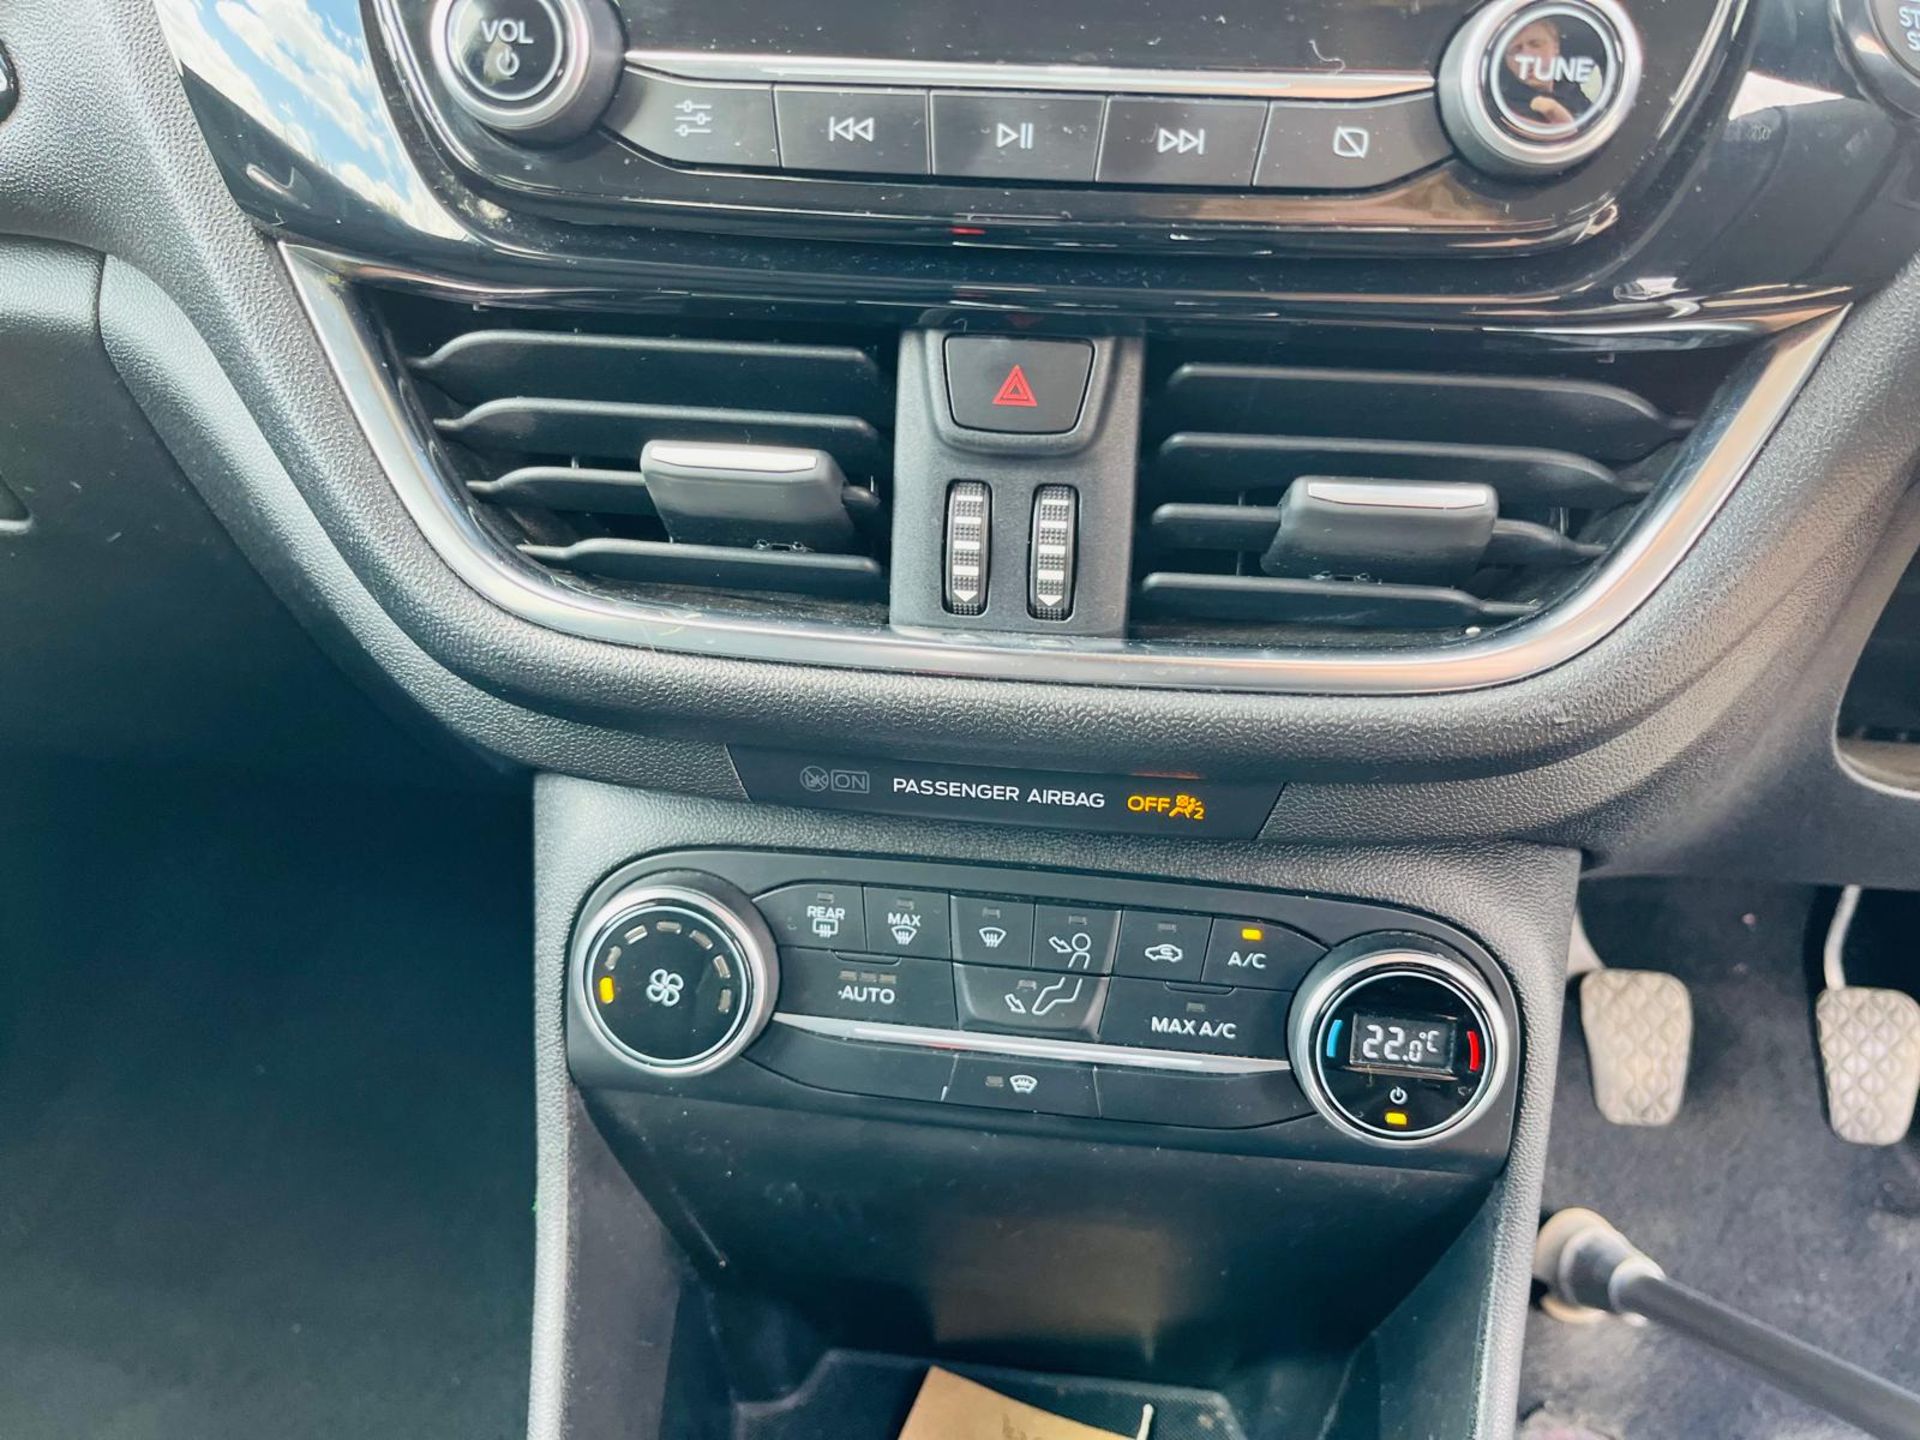 ** ON SALE **Ford Fiesta 100 Titanium 1.0 2018 '68 Reg' - A/C - Navigation - ULEZ Compliant - Image 19 of 34